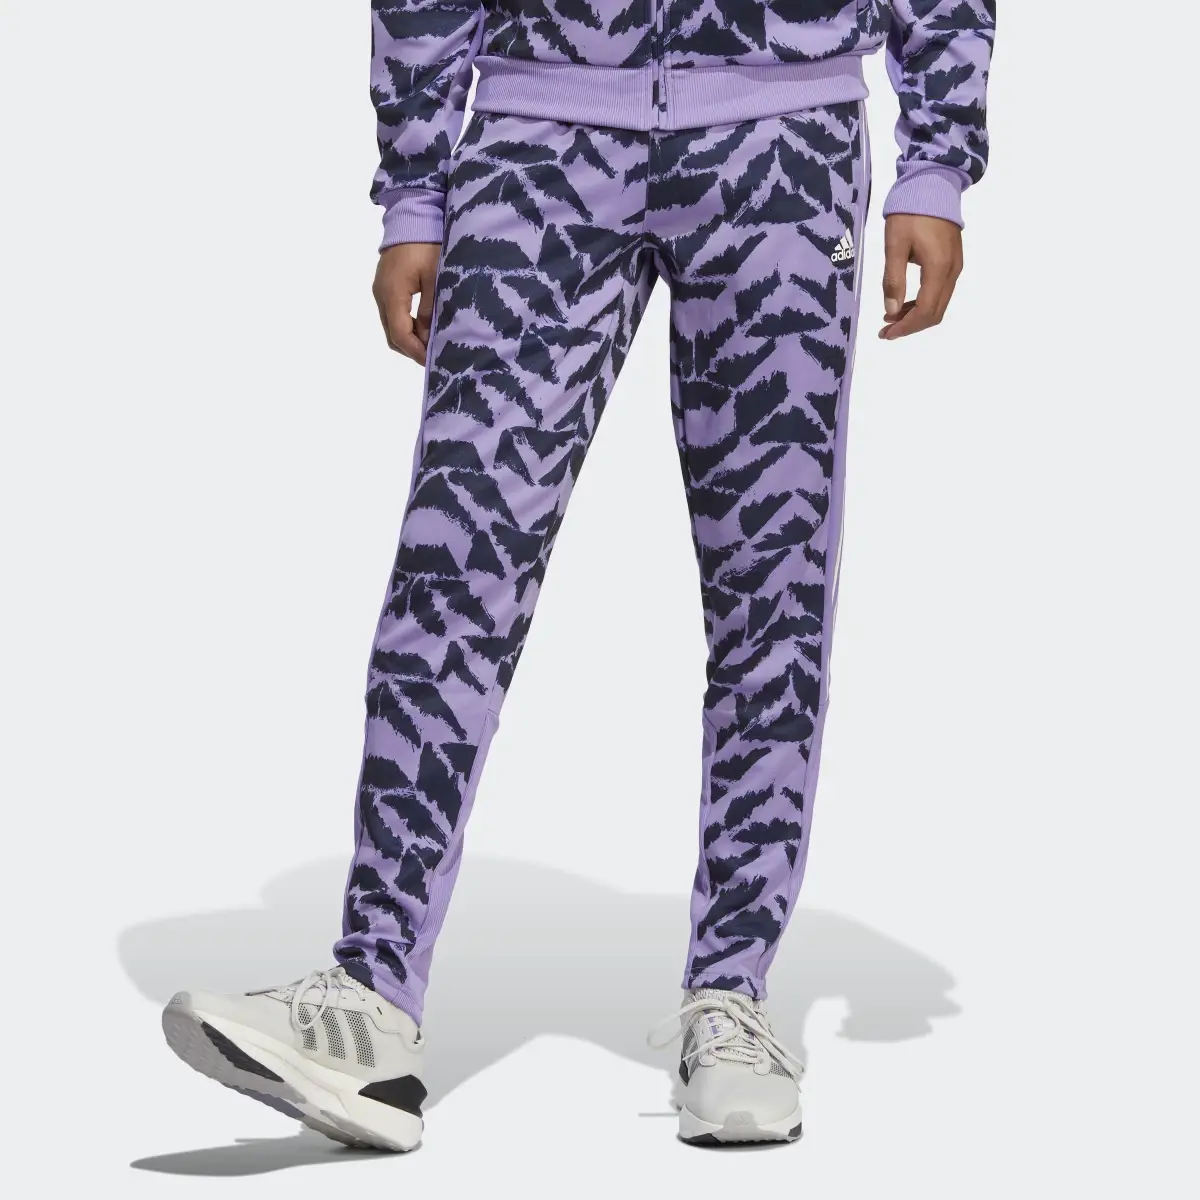 Adidas Pants Deportivos Tiro Suit-Up Lifestyle. 1